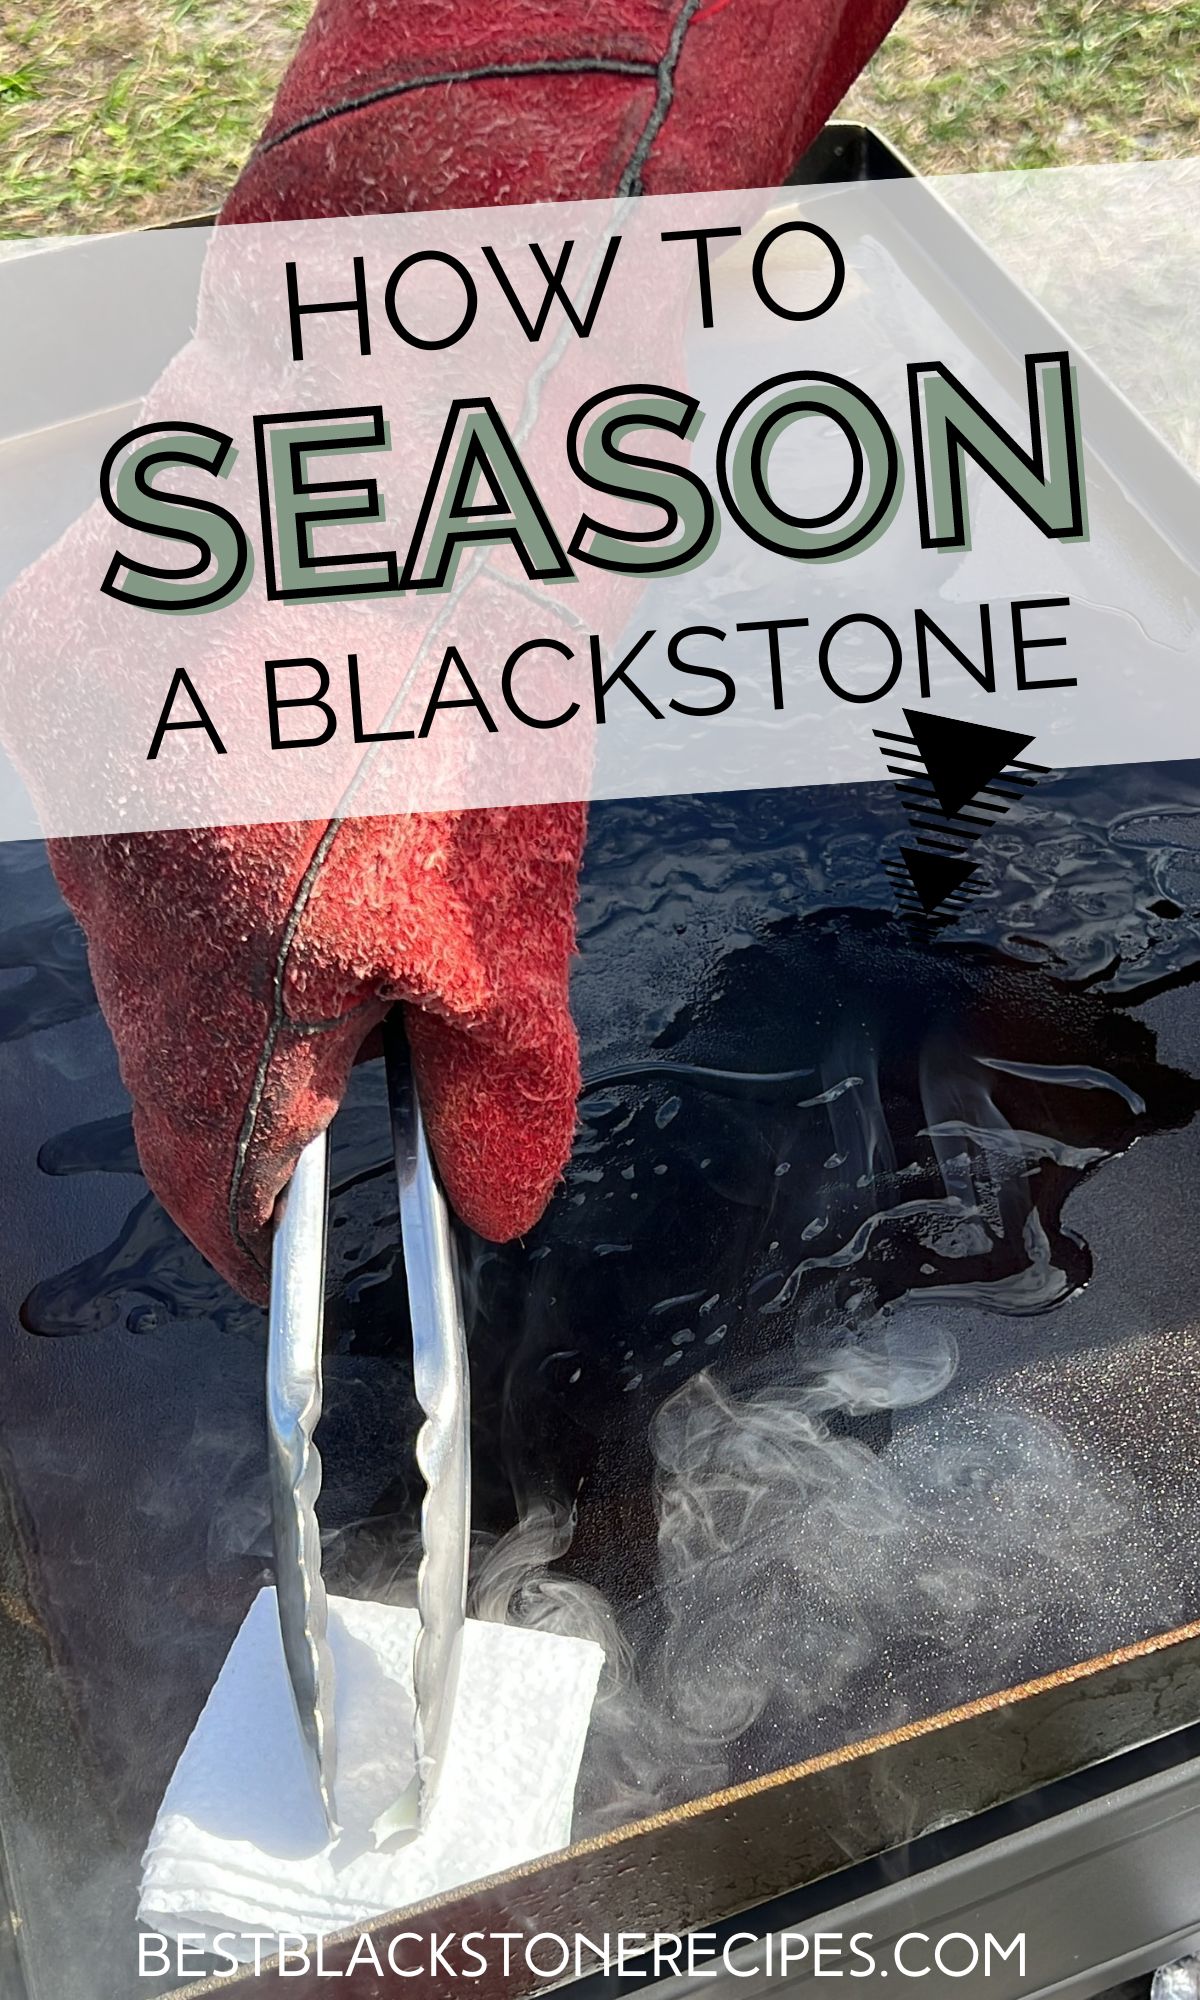 HOW TO season a blackstone